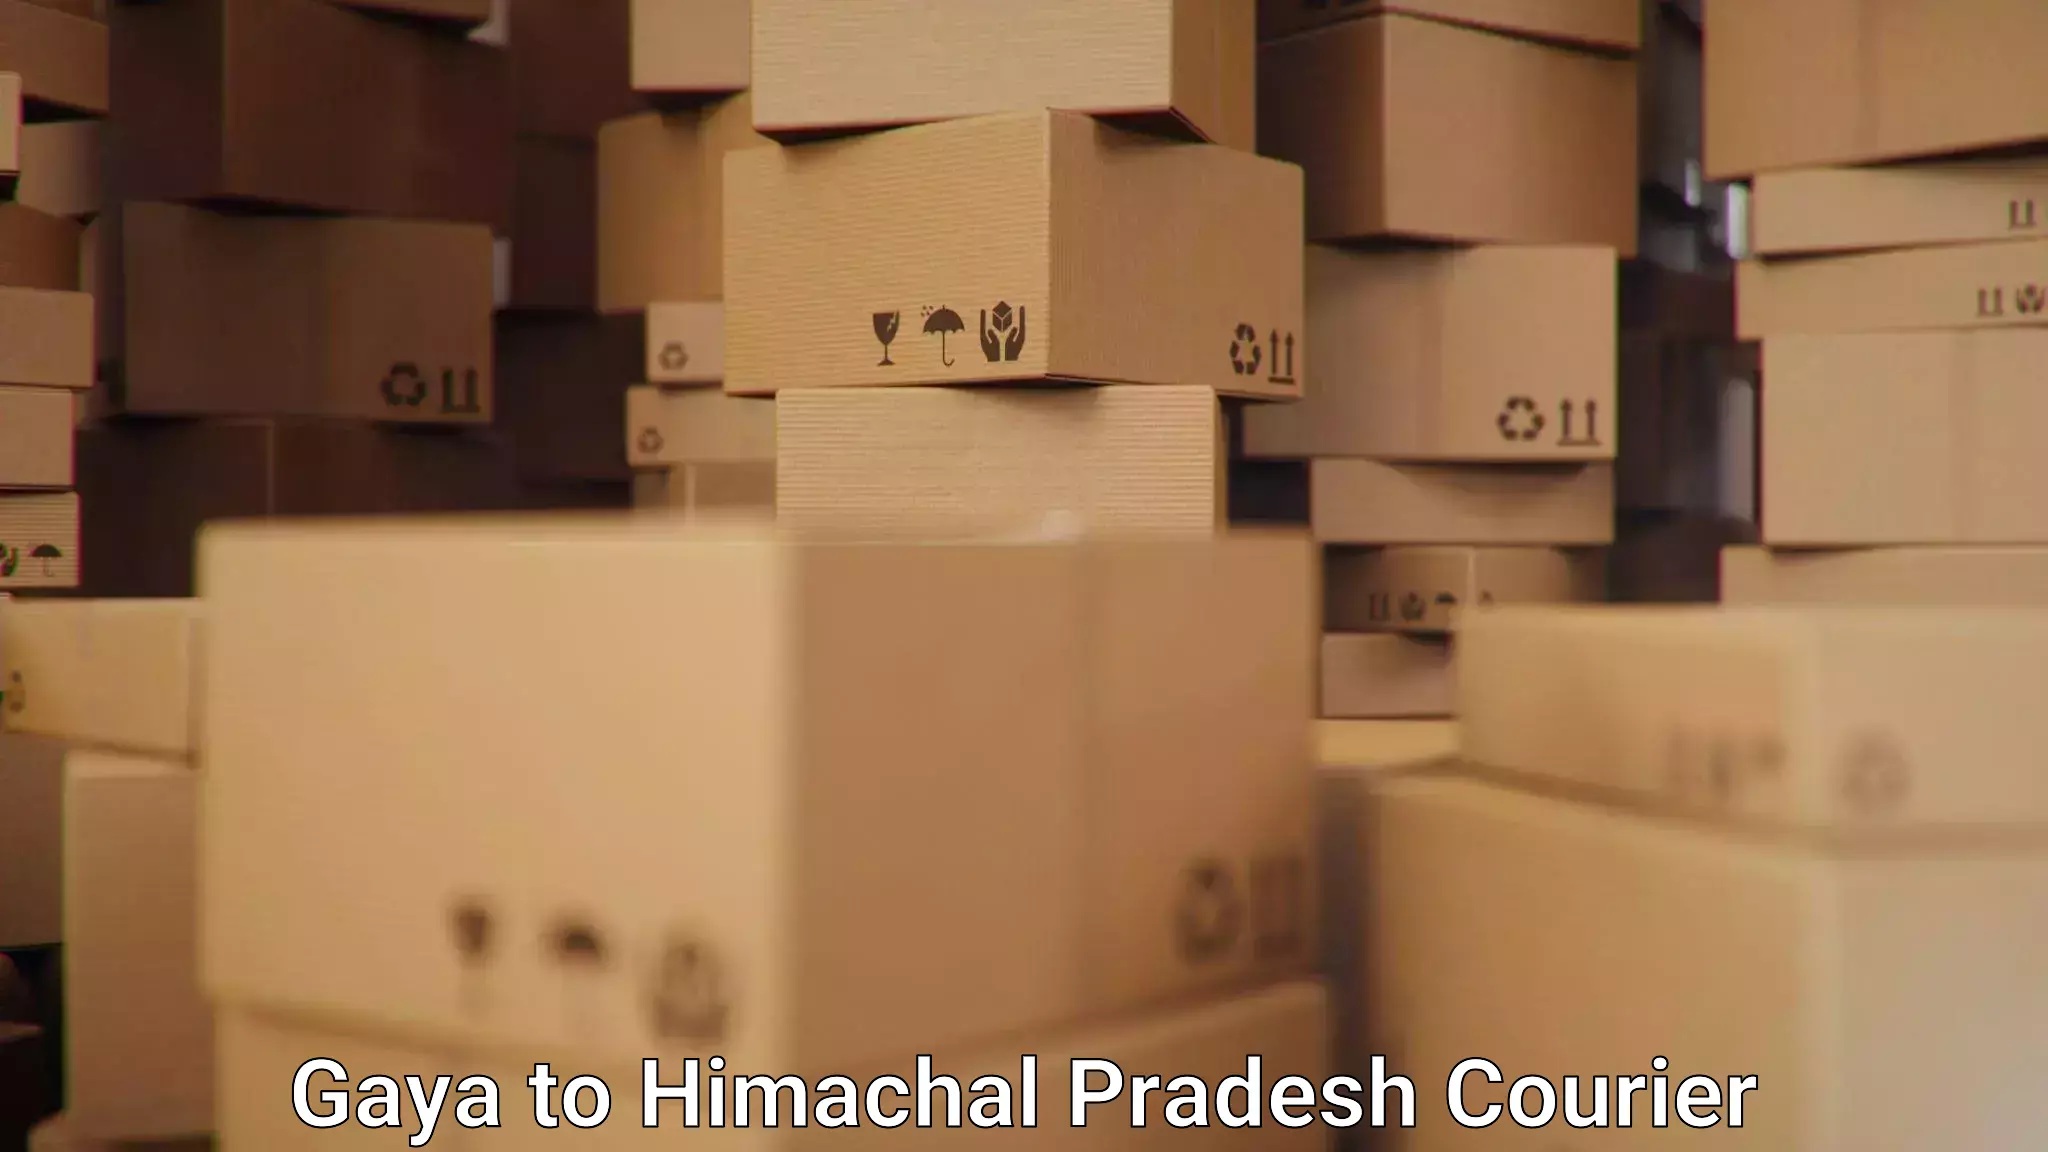 Full-service courier options Gaya to Himachal Pradesh